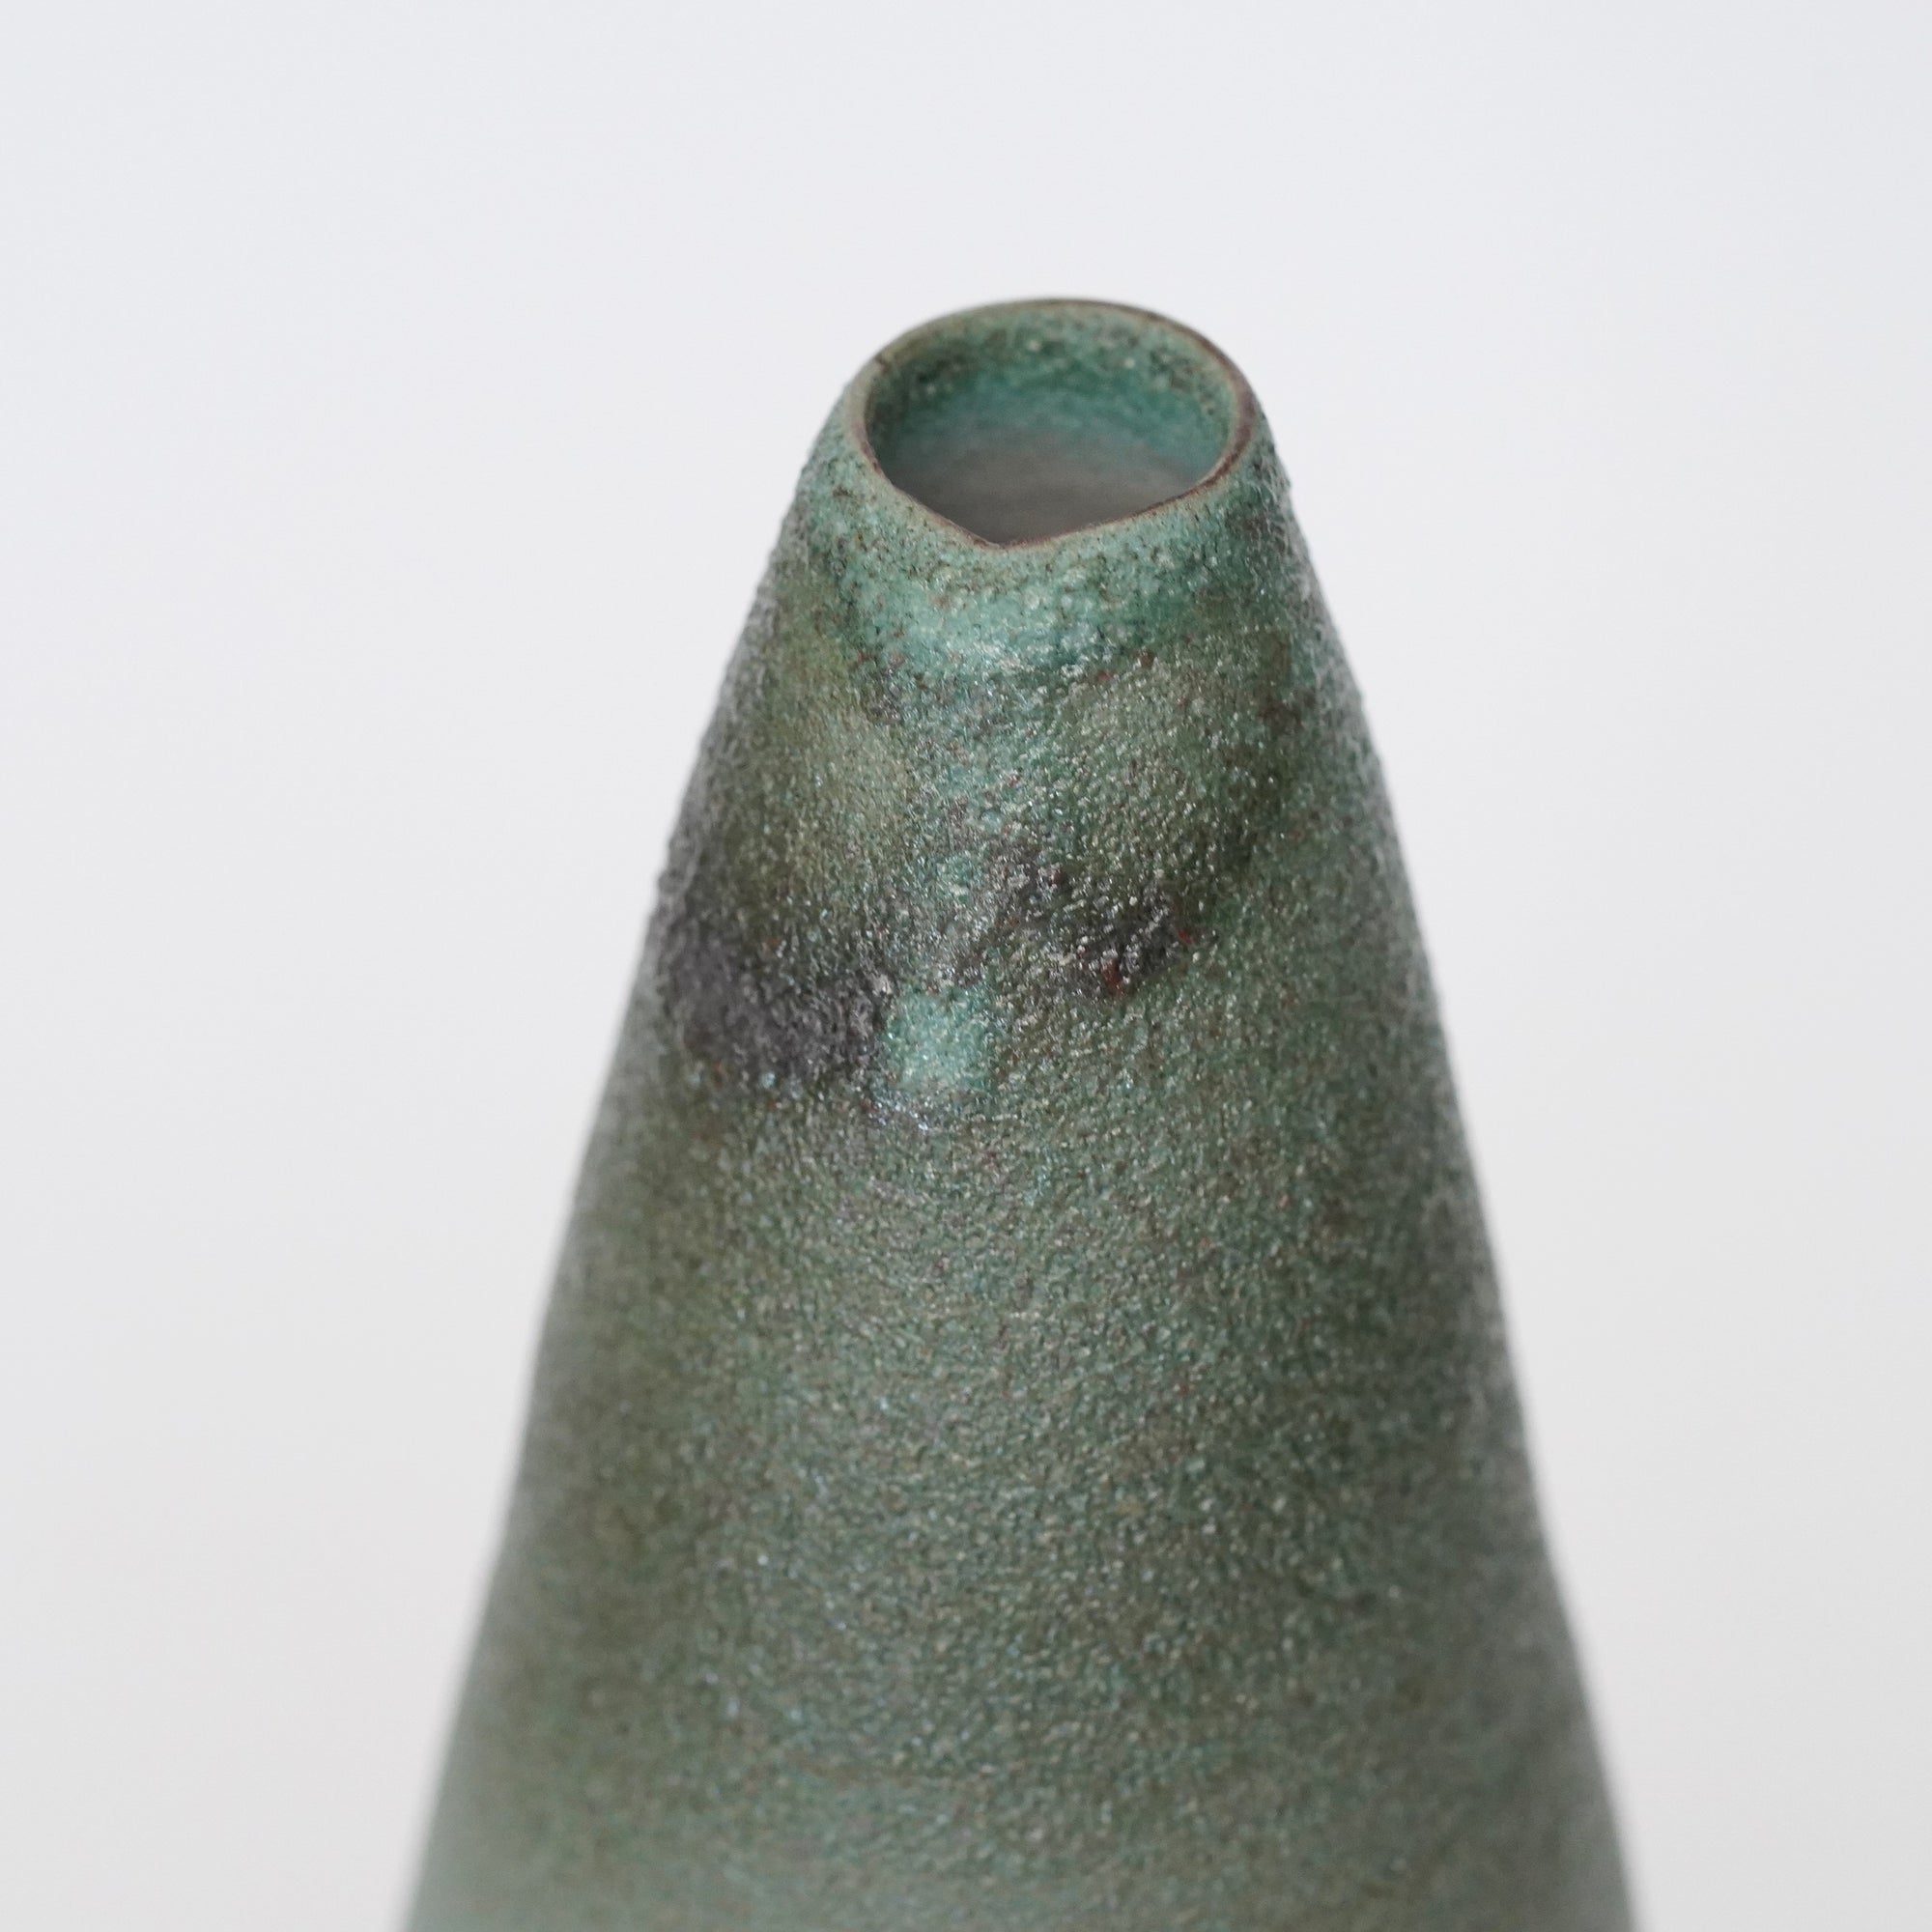 [Etsushi Noguchi] Green and white glazed flower vase